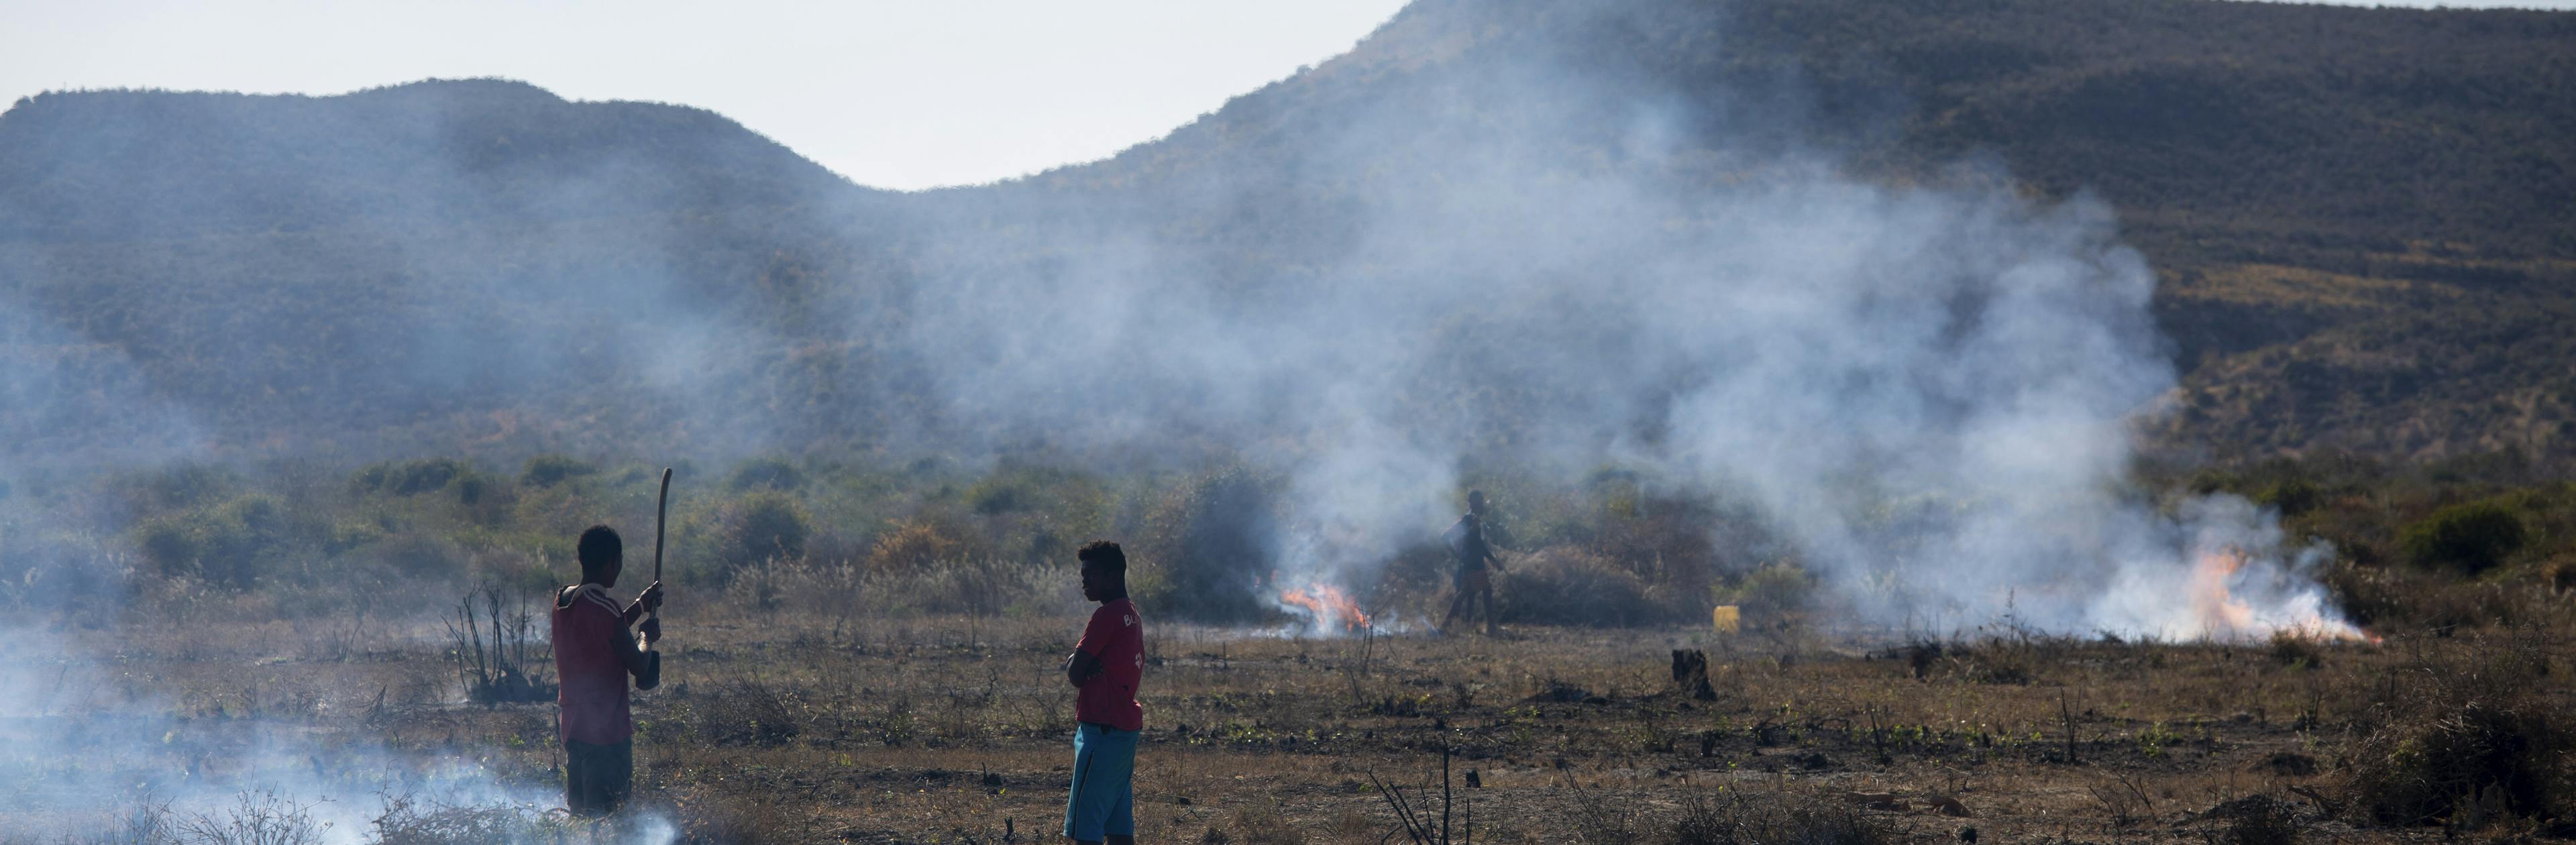 Men burning rubbish in Madagascar - Environmental degradation caused by waste burning